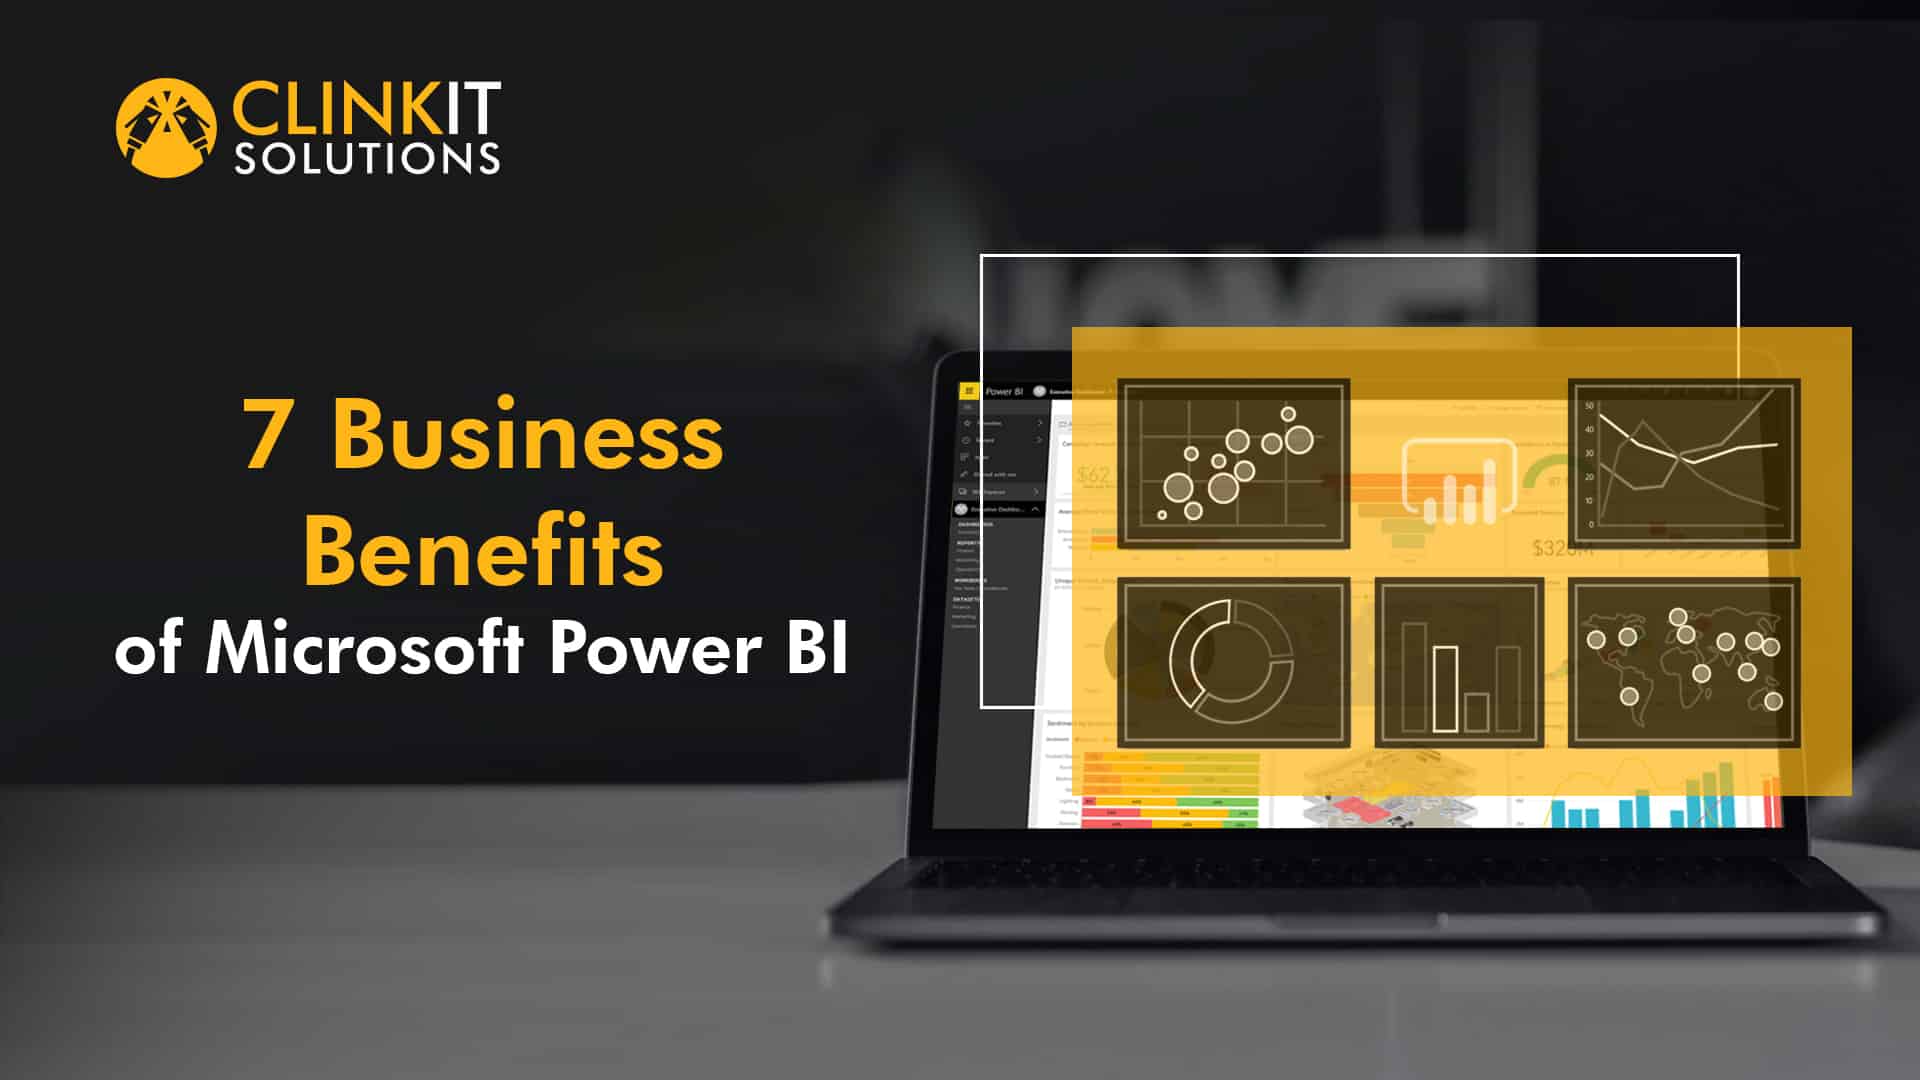 https://www.clinkitsolutions.com/7-business-benefits-microsoft-power-bi/